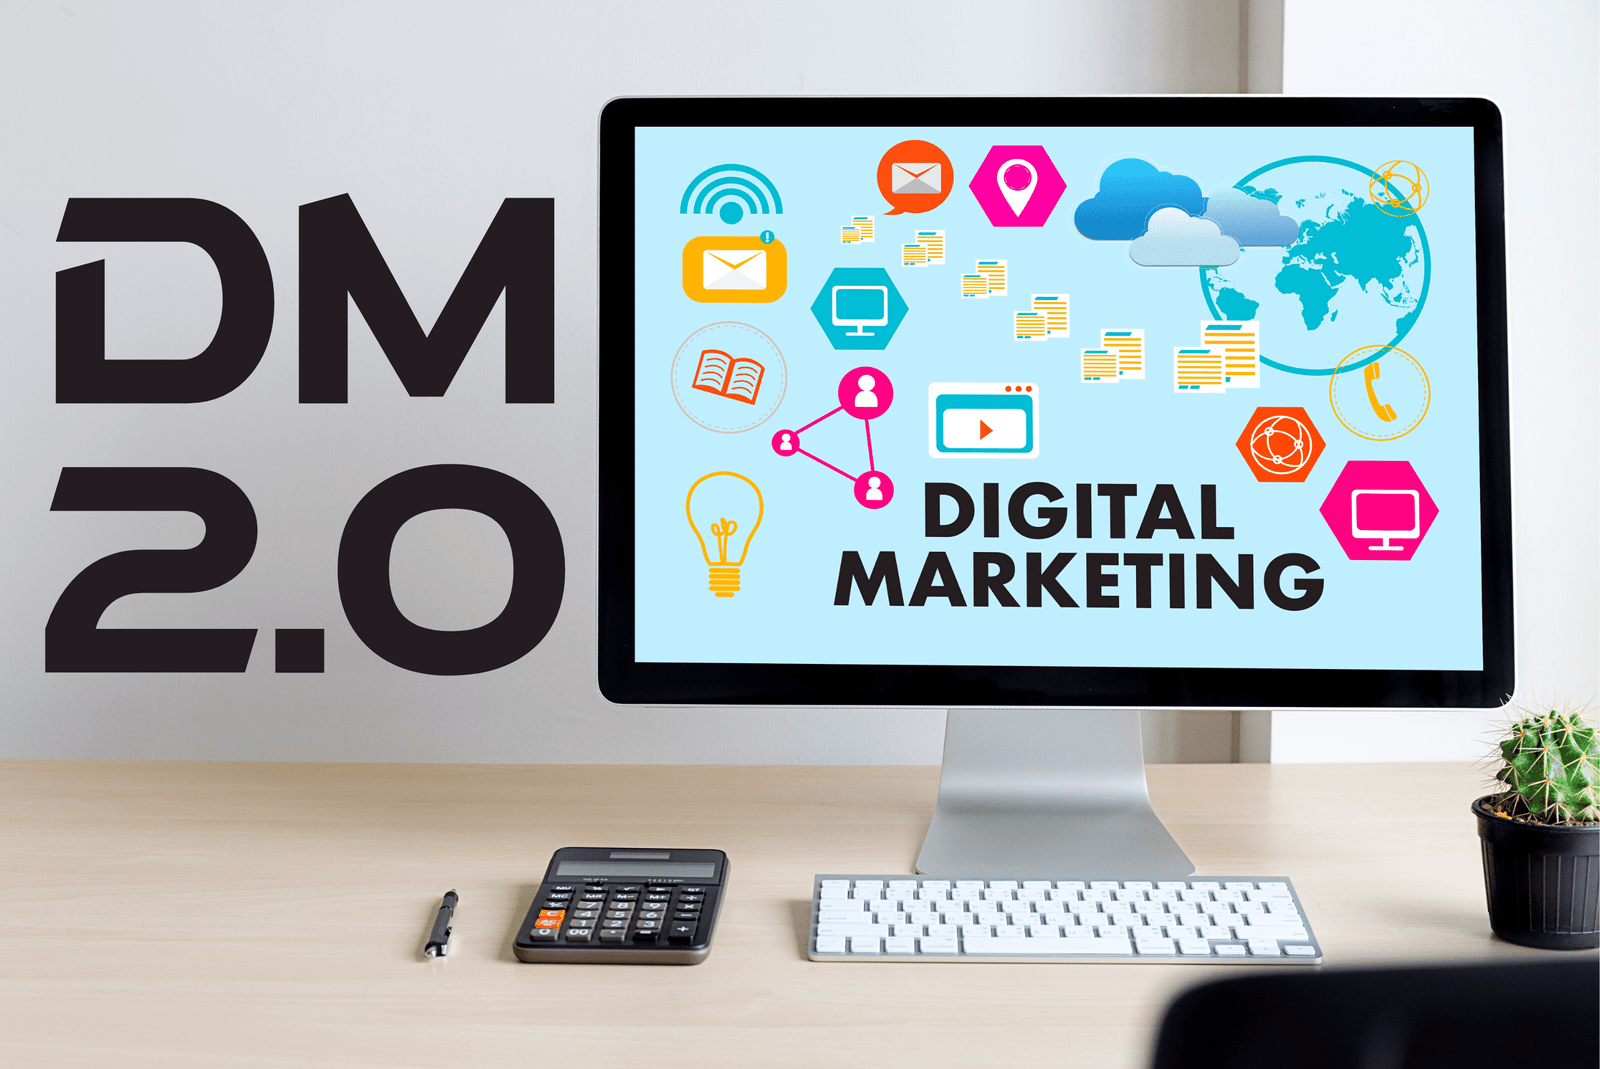 Digital Marketing 2.0